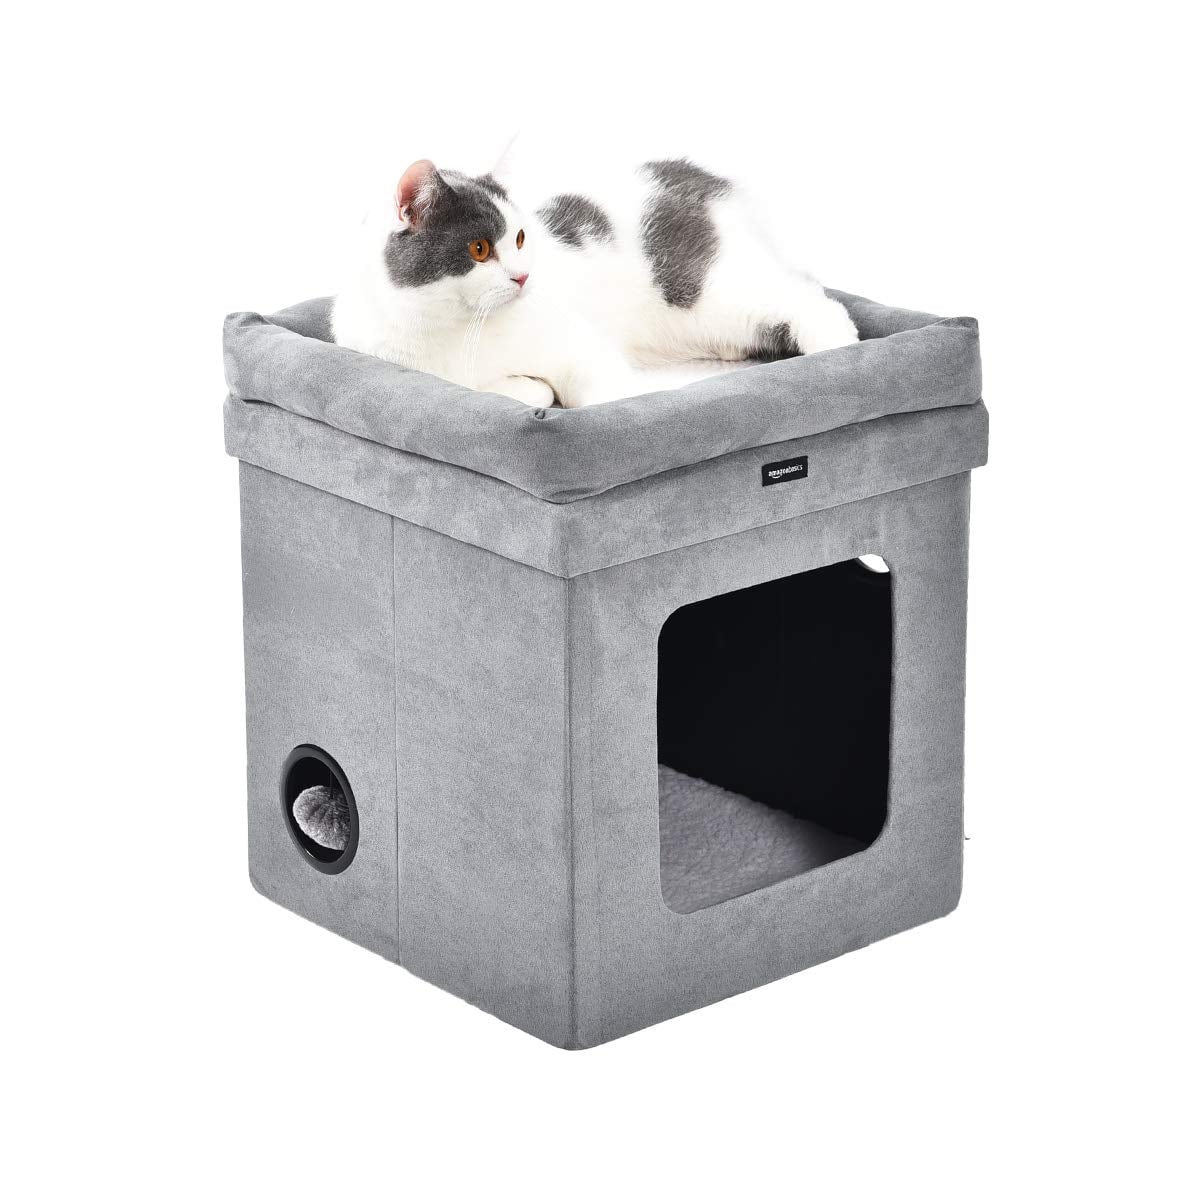 Cube cats. Матерчатый куб для кошки. Икеа куб с кошкой. Вставка в куб для кошки. Zxc Cat кубик.